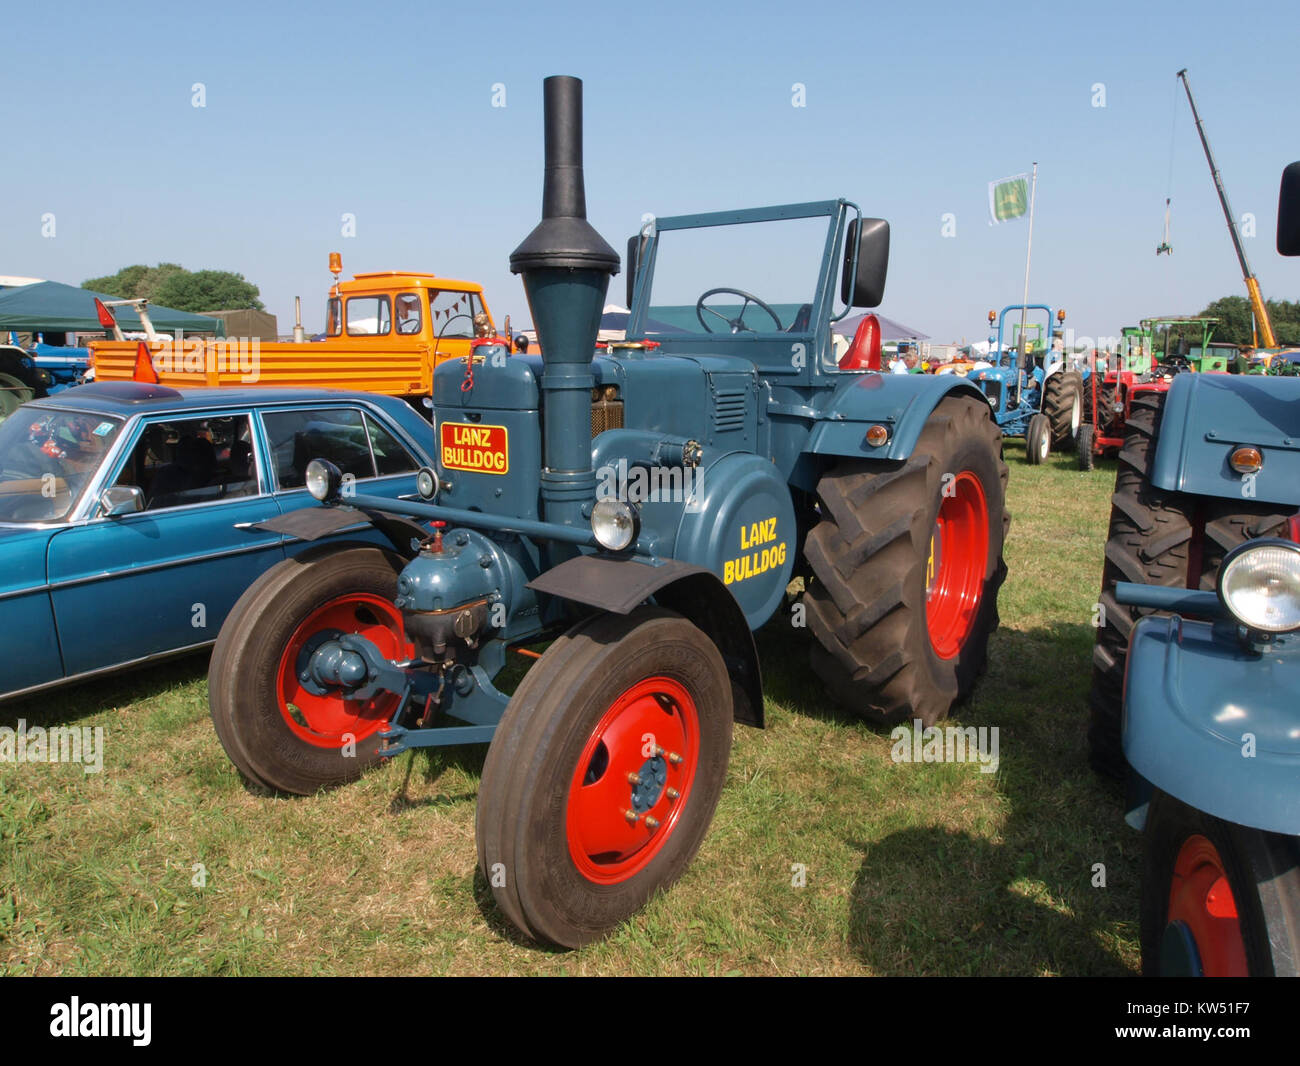 Historischer john deere traktor -Fotos und -Bildmaterial in hoher Auflösung  – Alamy